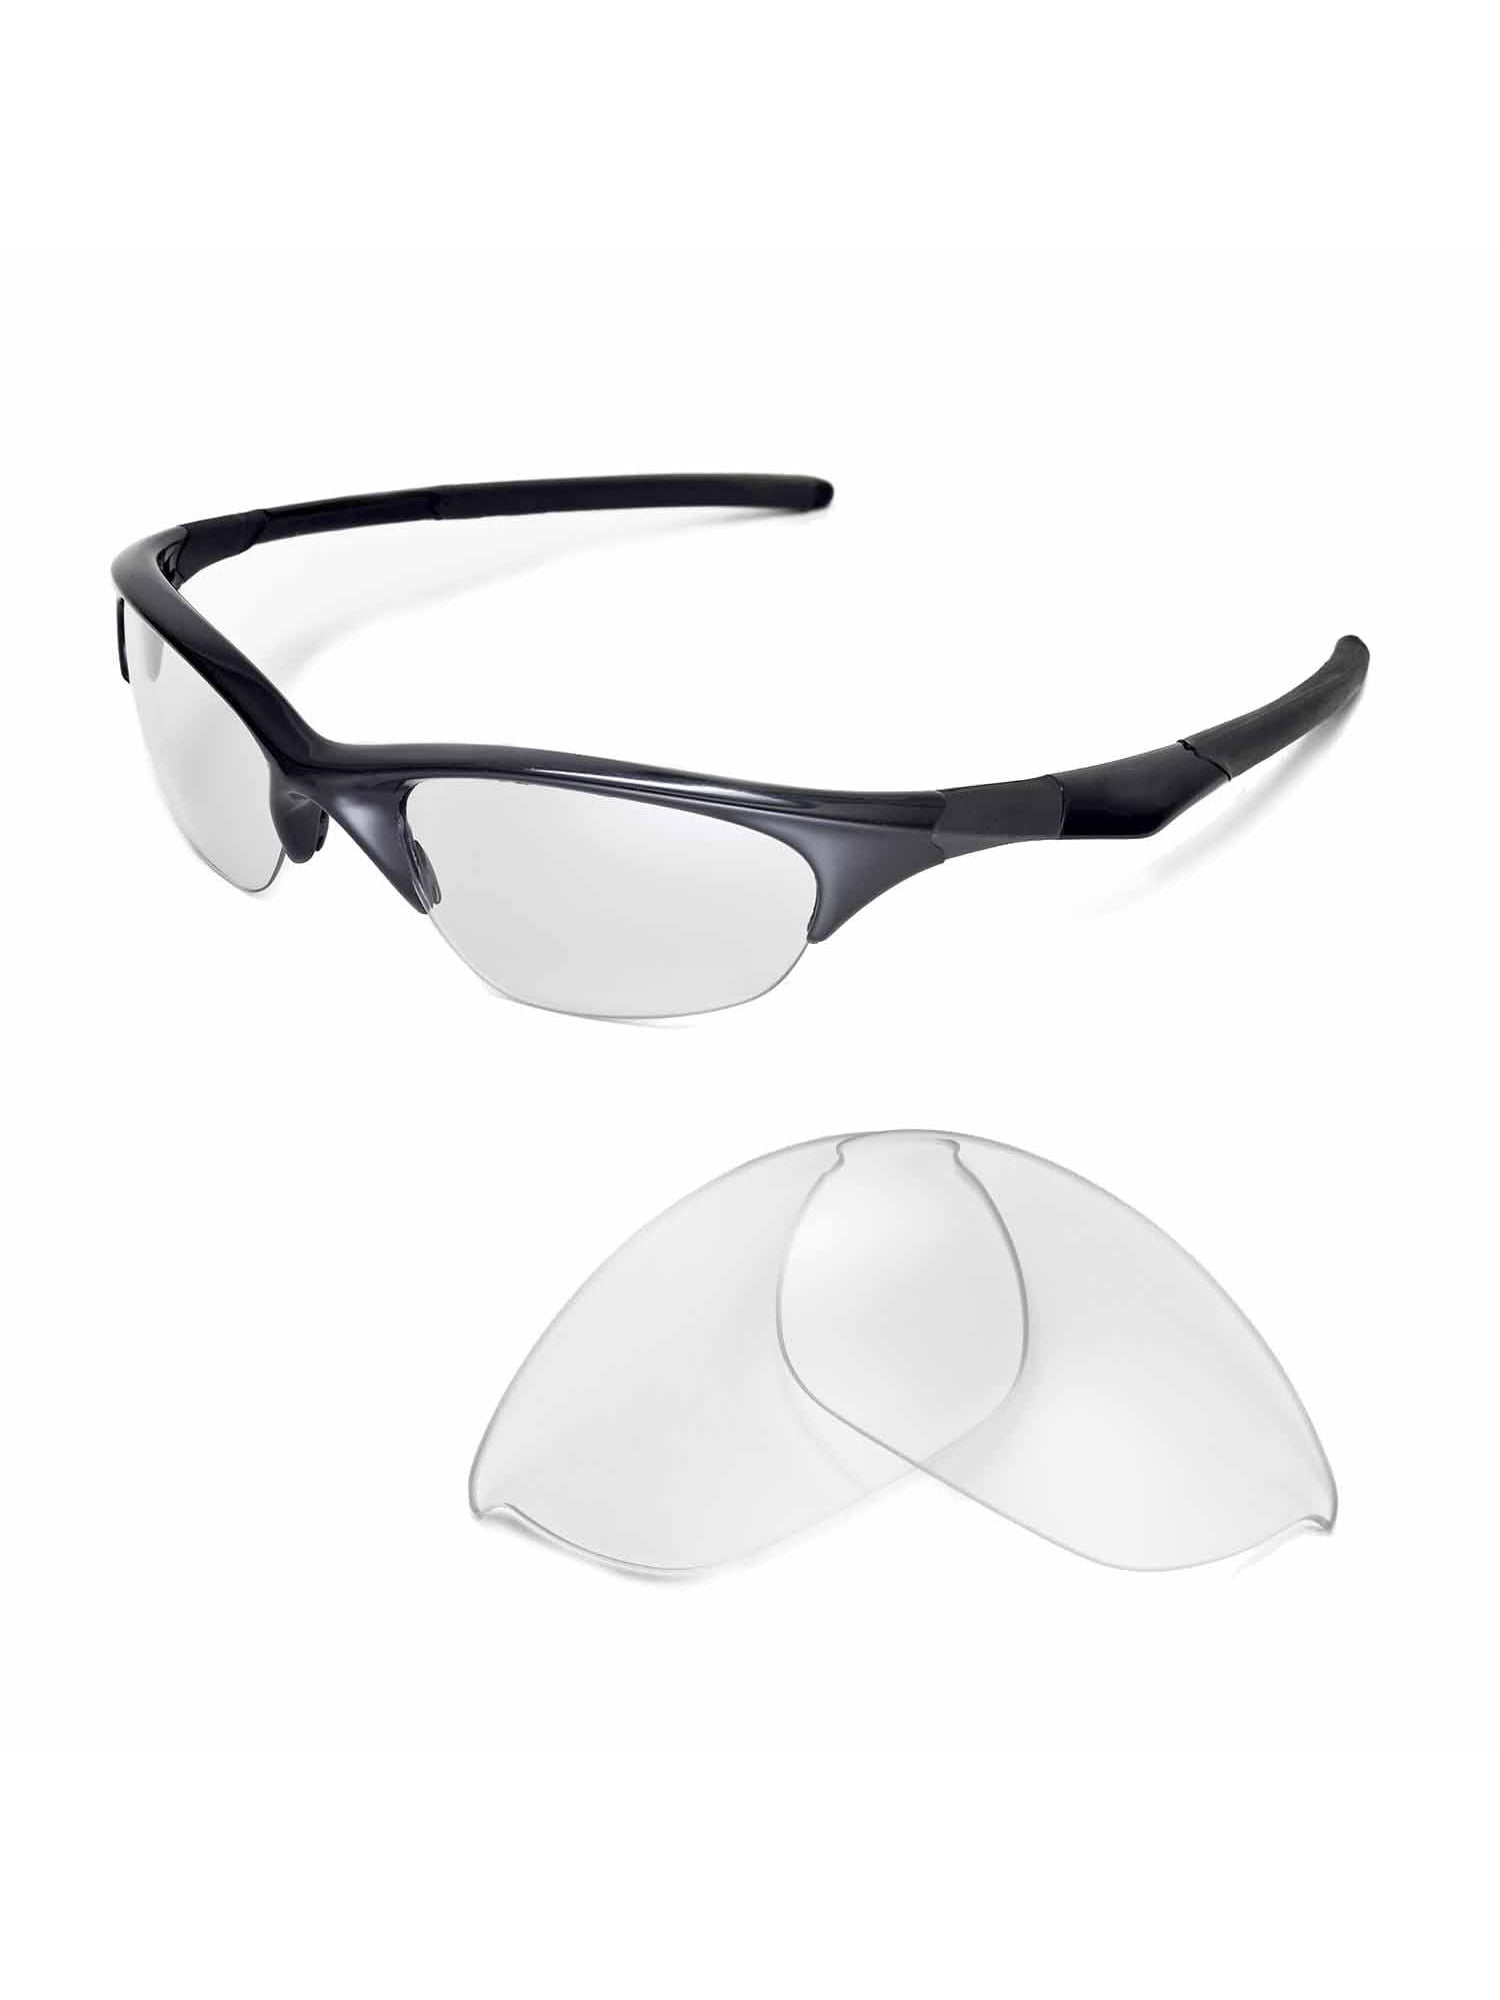 Walleva Replacement Oakley Half Jacket Sunglasses - Walmart.com